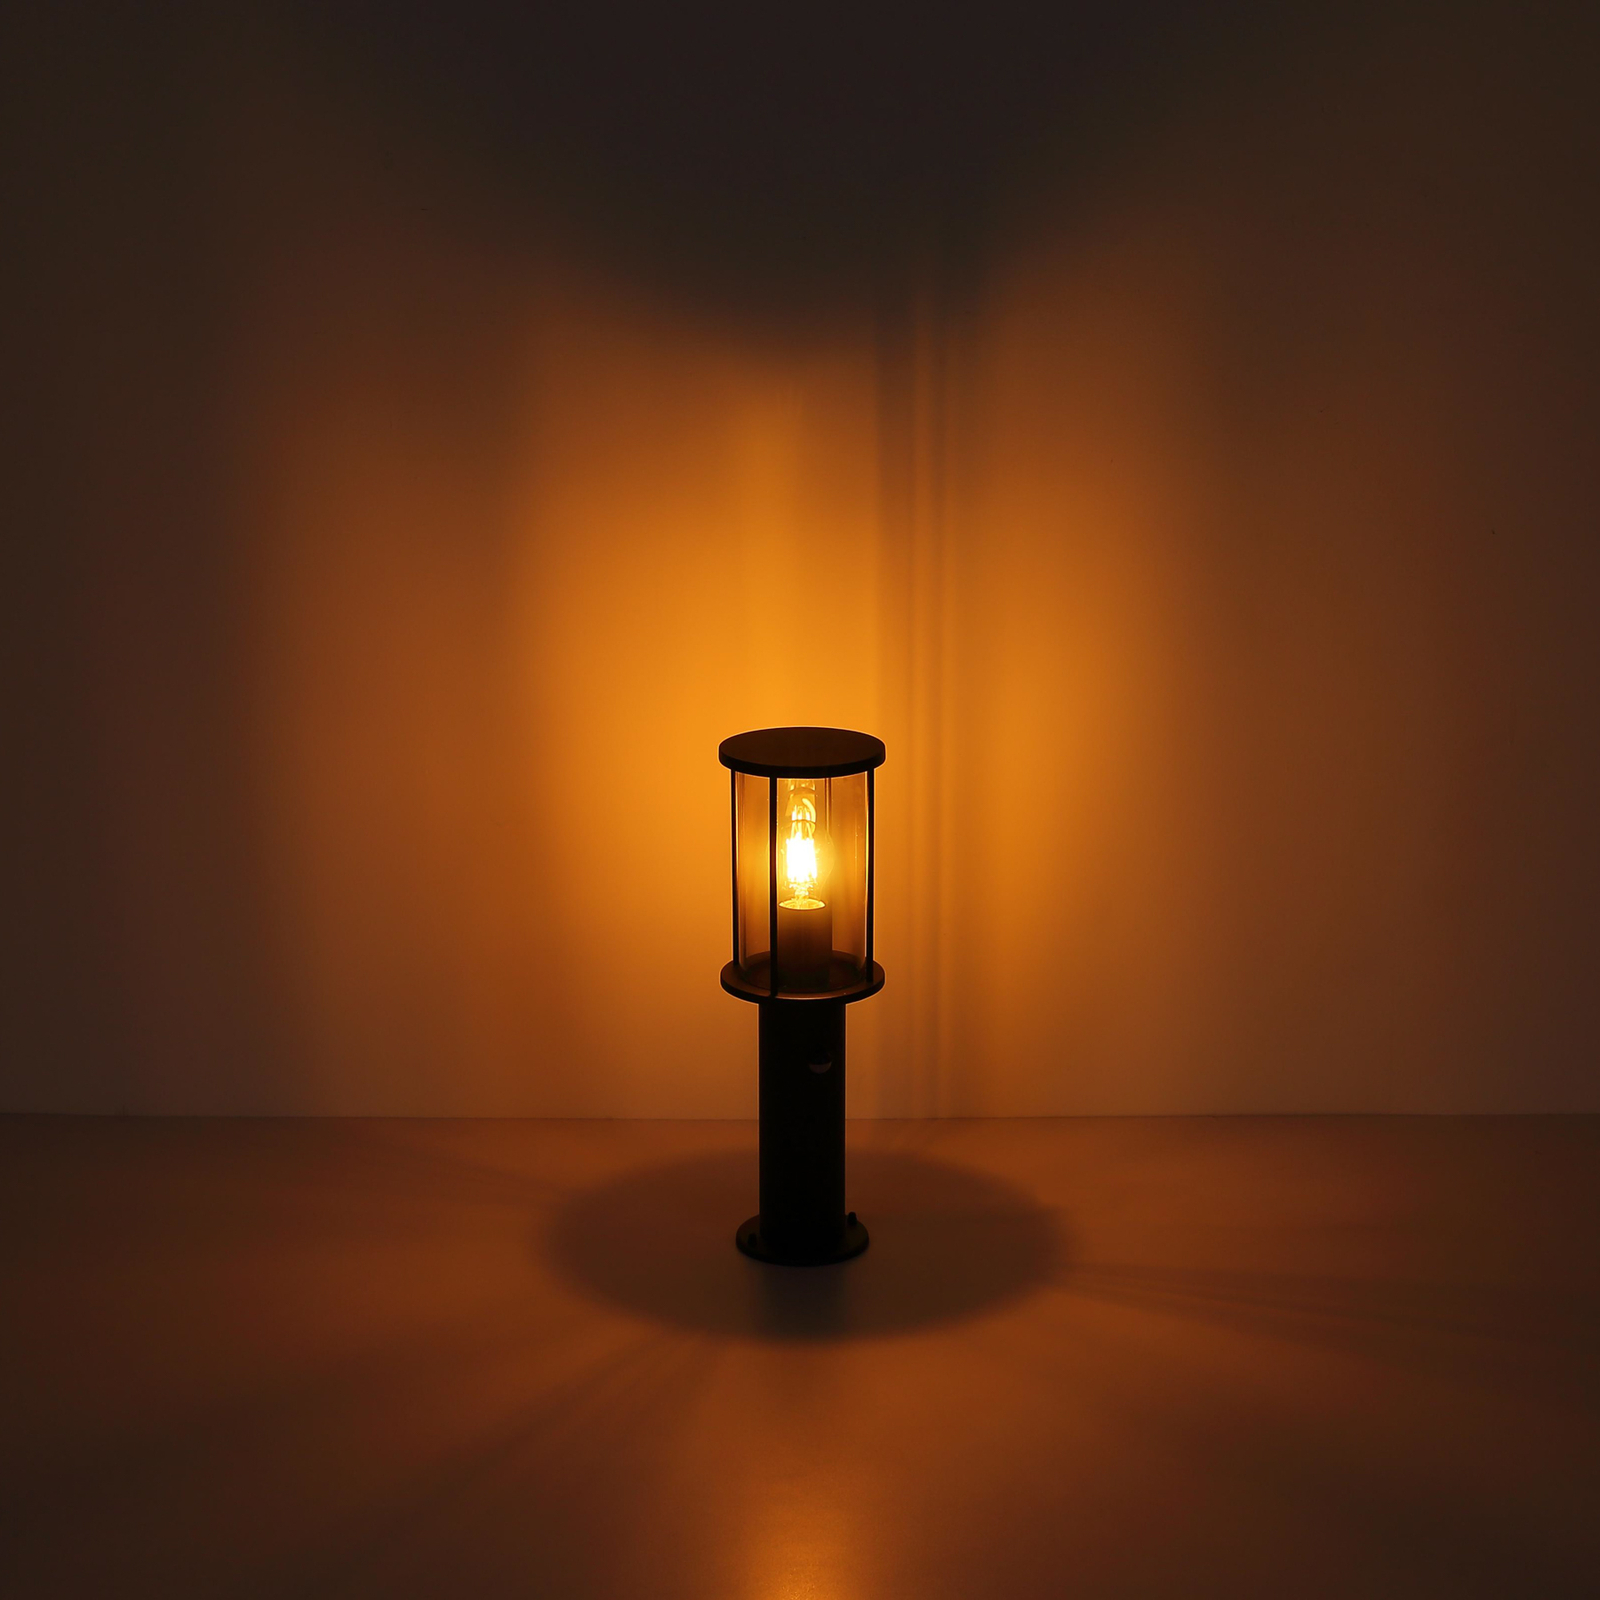 Gracey pillar light, height 45 cm, black, stainless steel, IP54